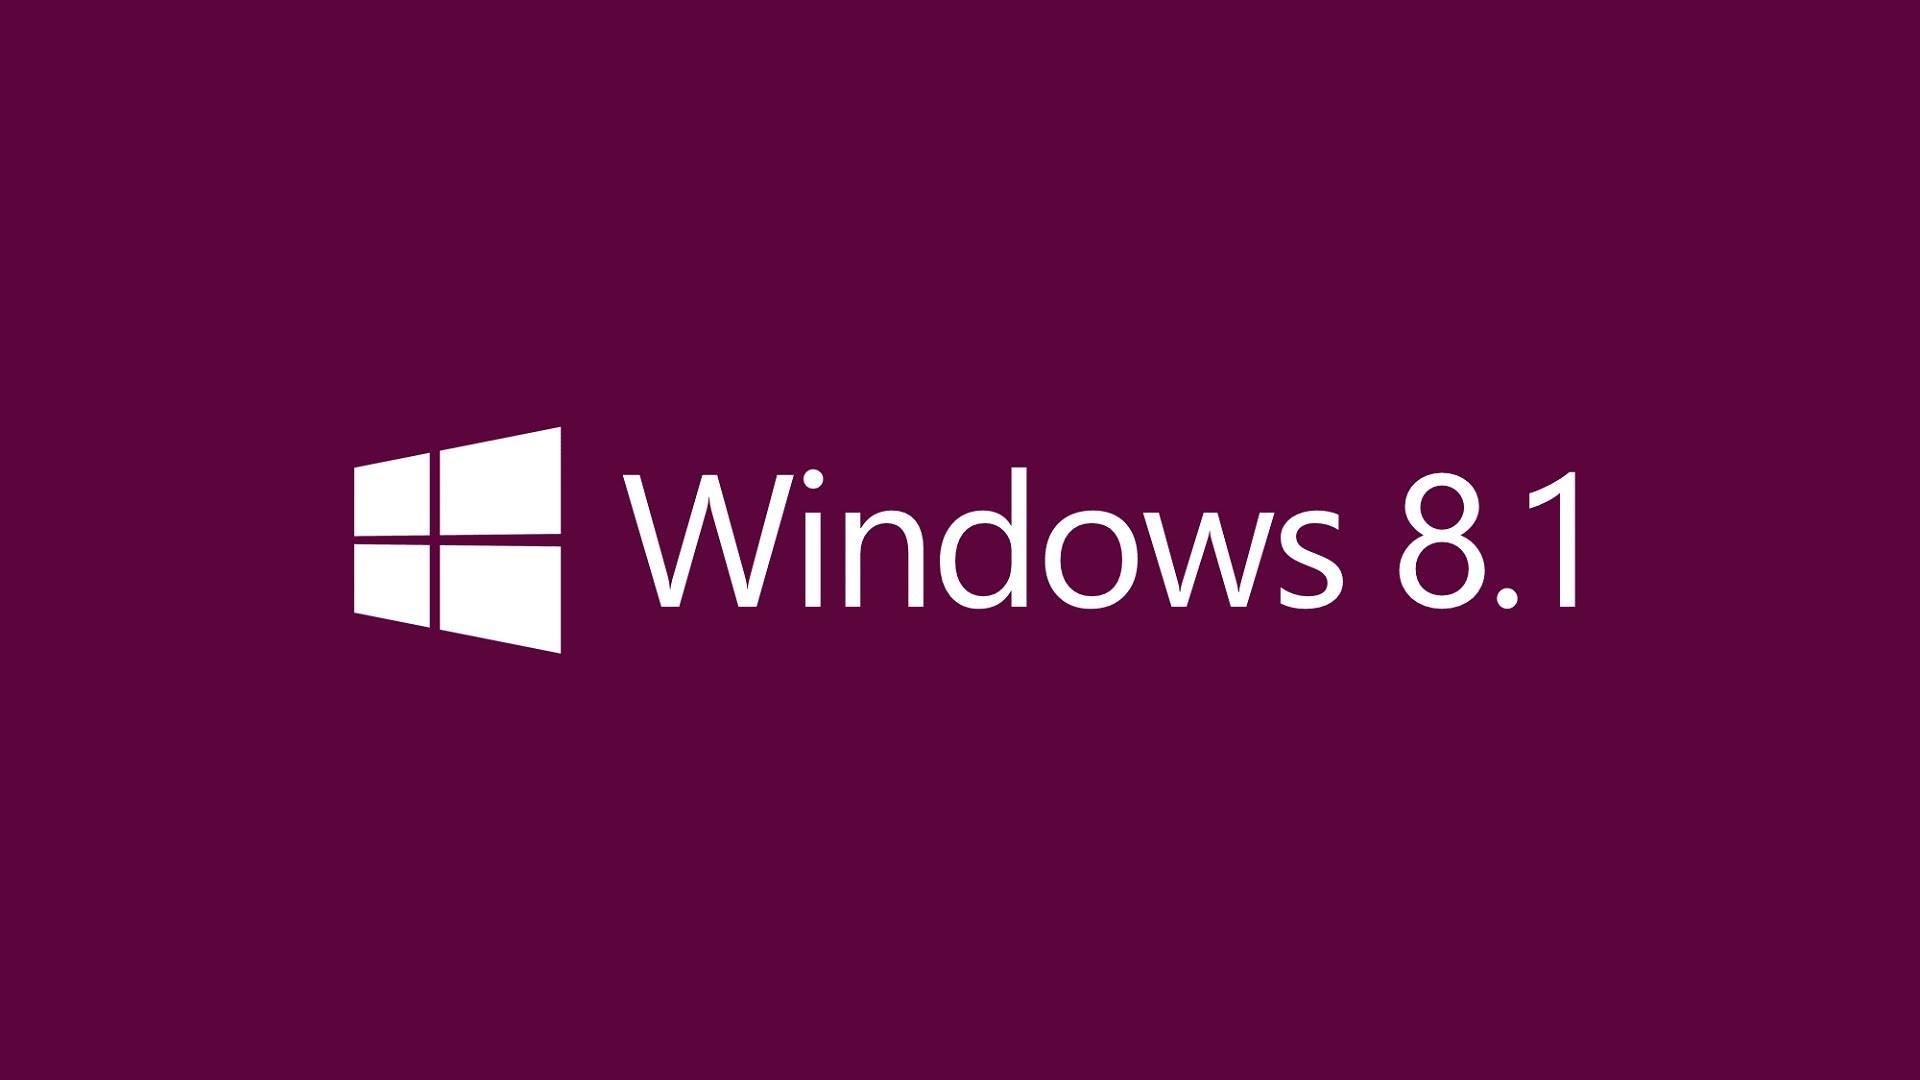 Windows 8.1 HD Backgrounds